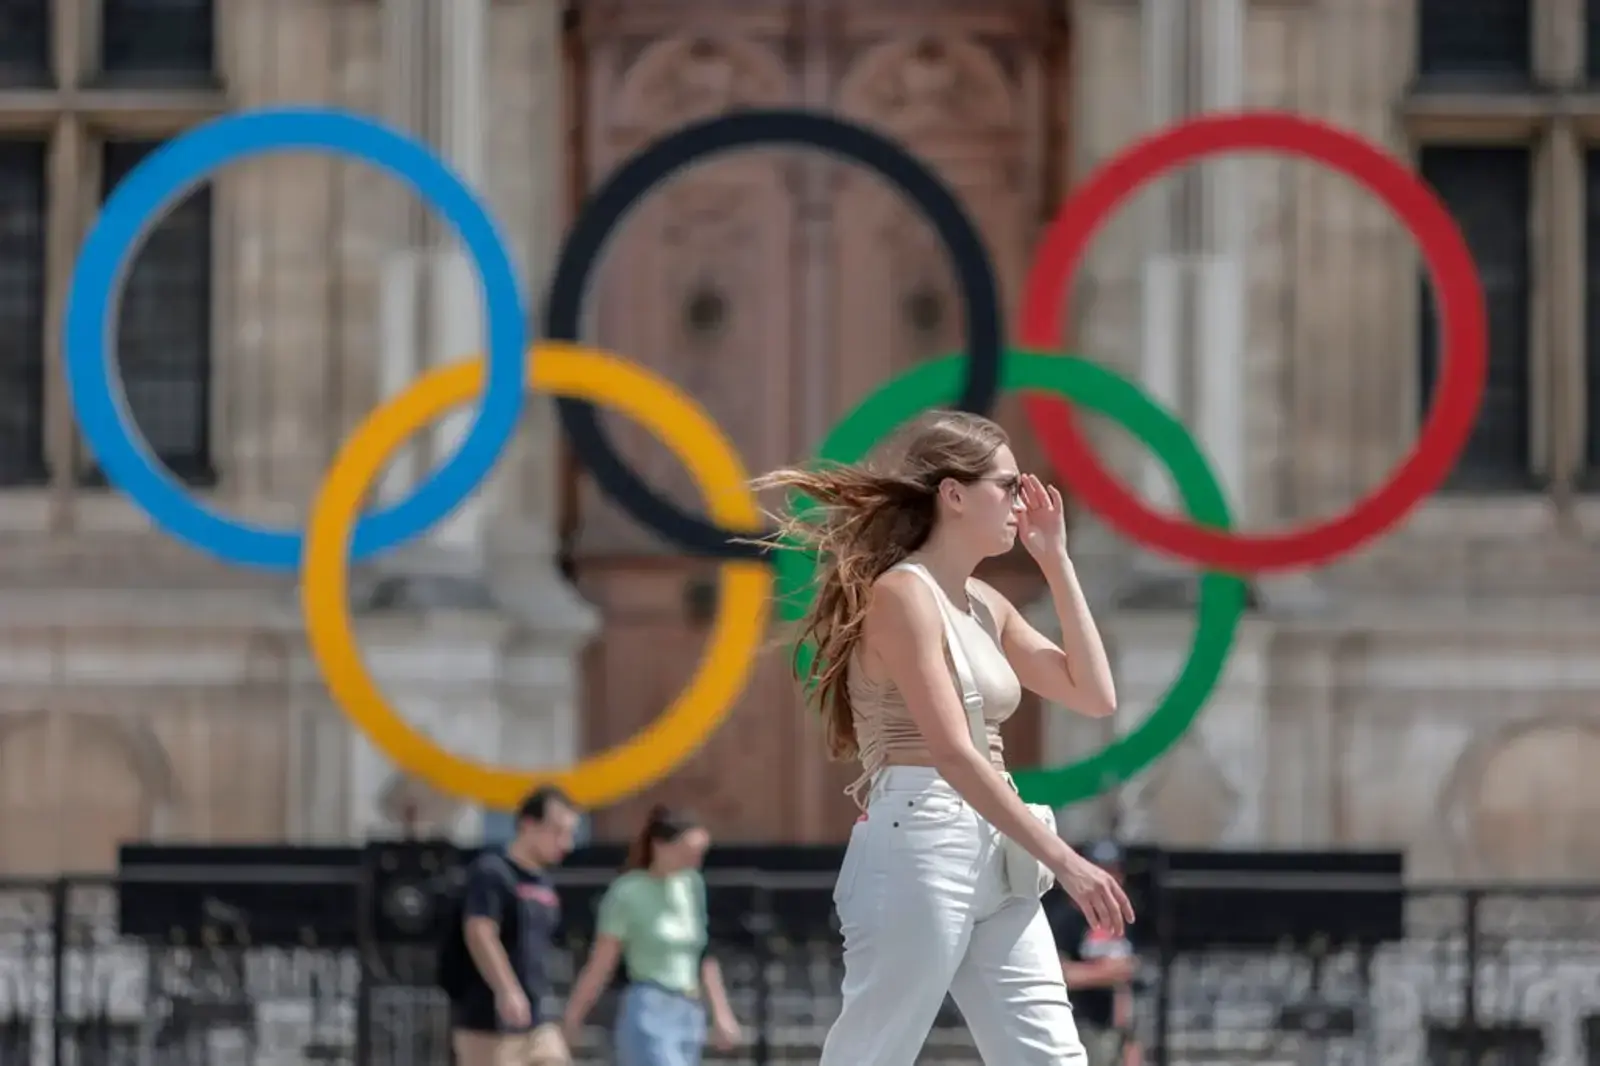 New report warns of heat danger at Paris Olympics